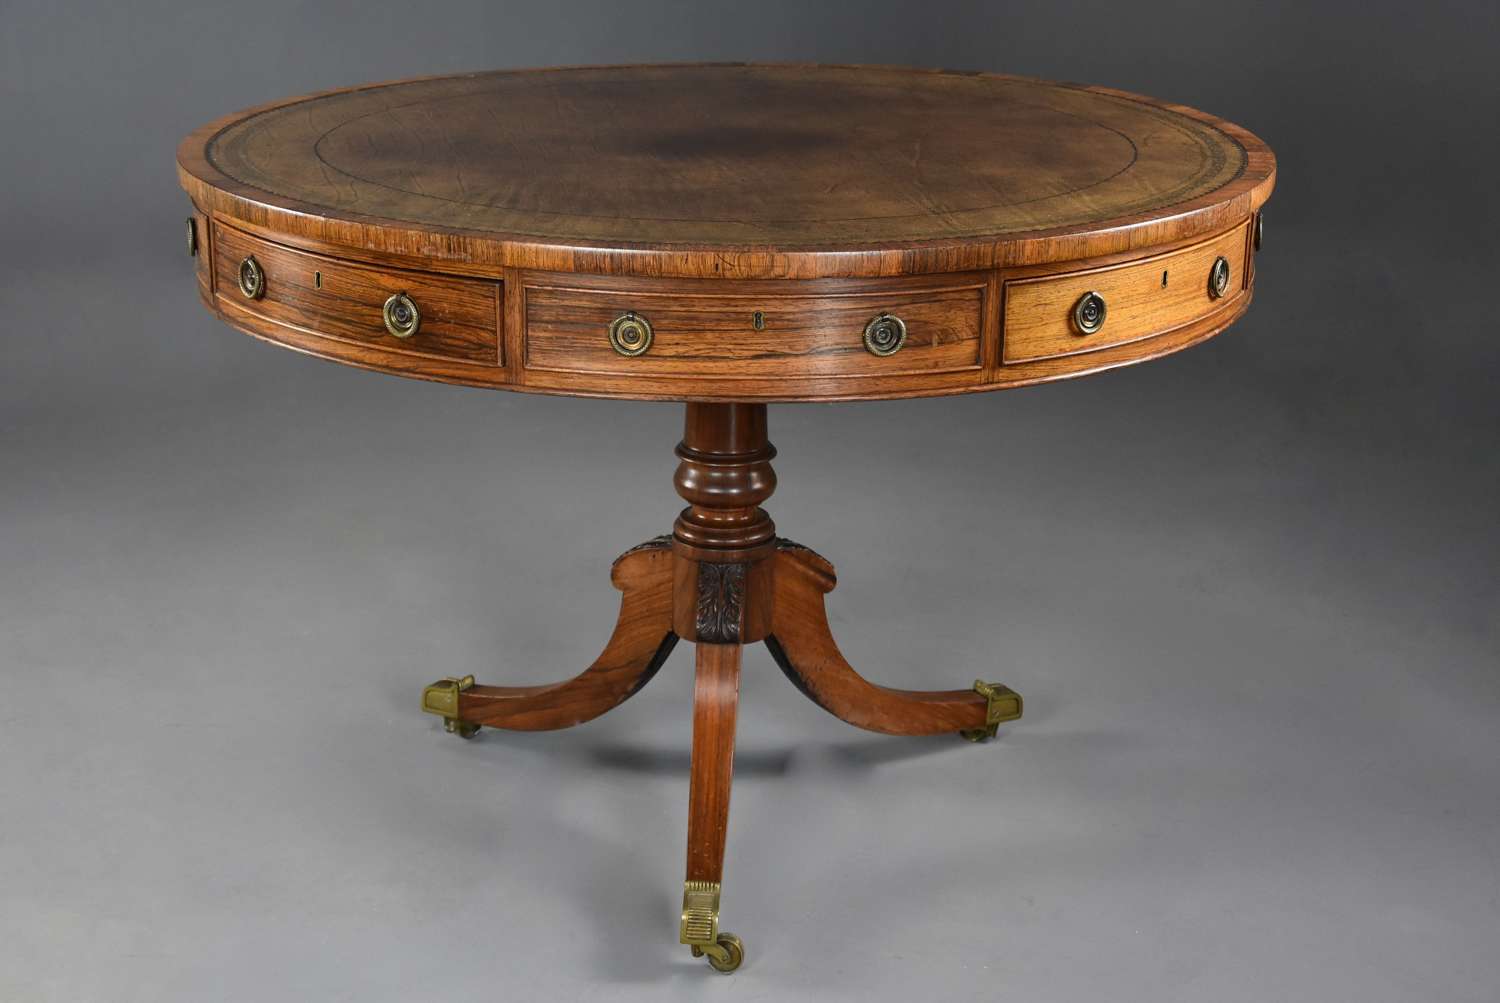 Early 19th century Regency rosewood drum table